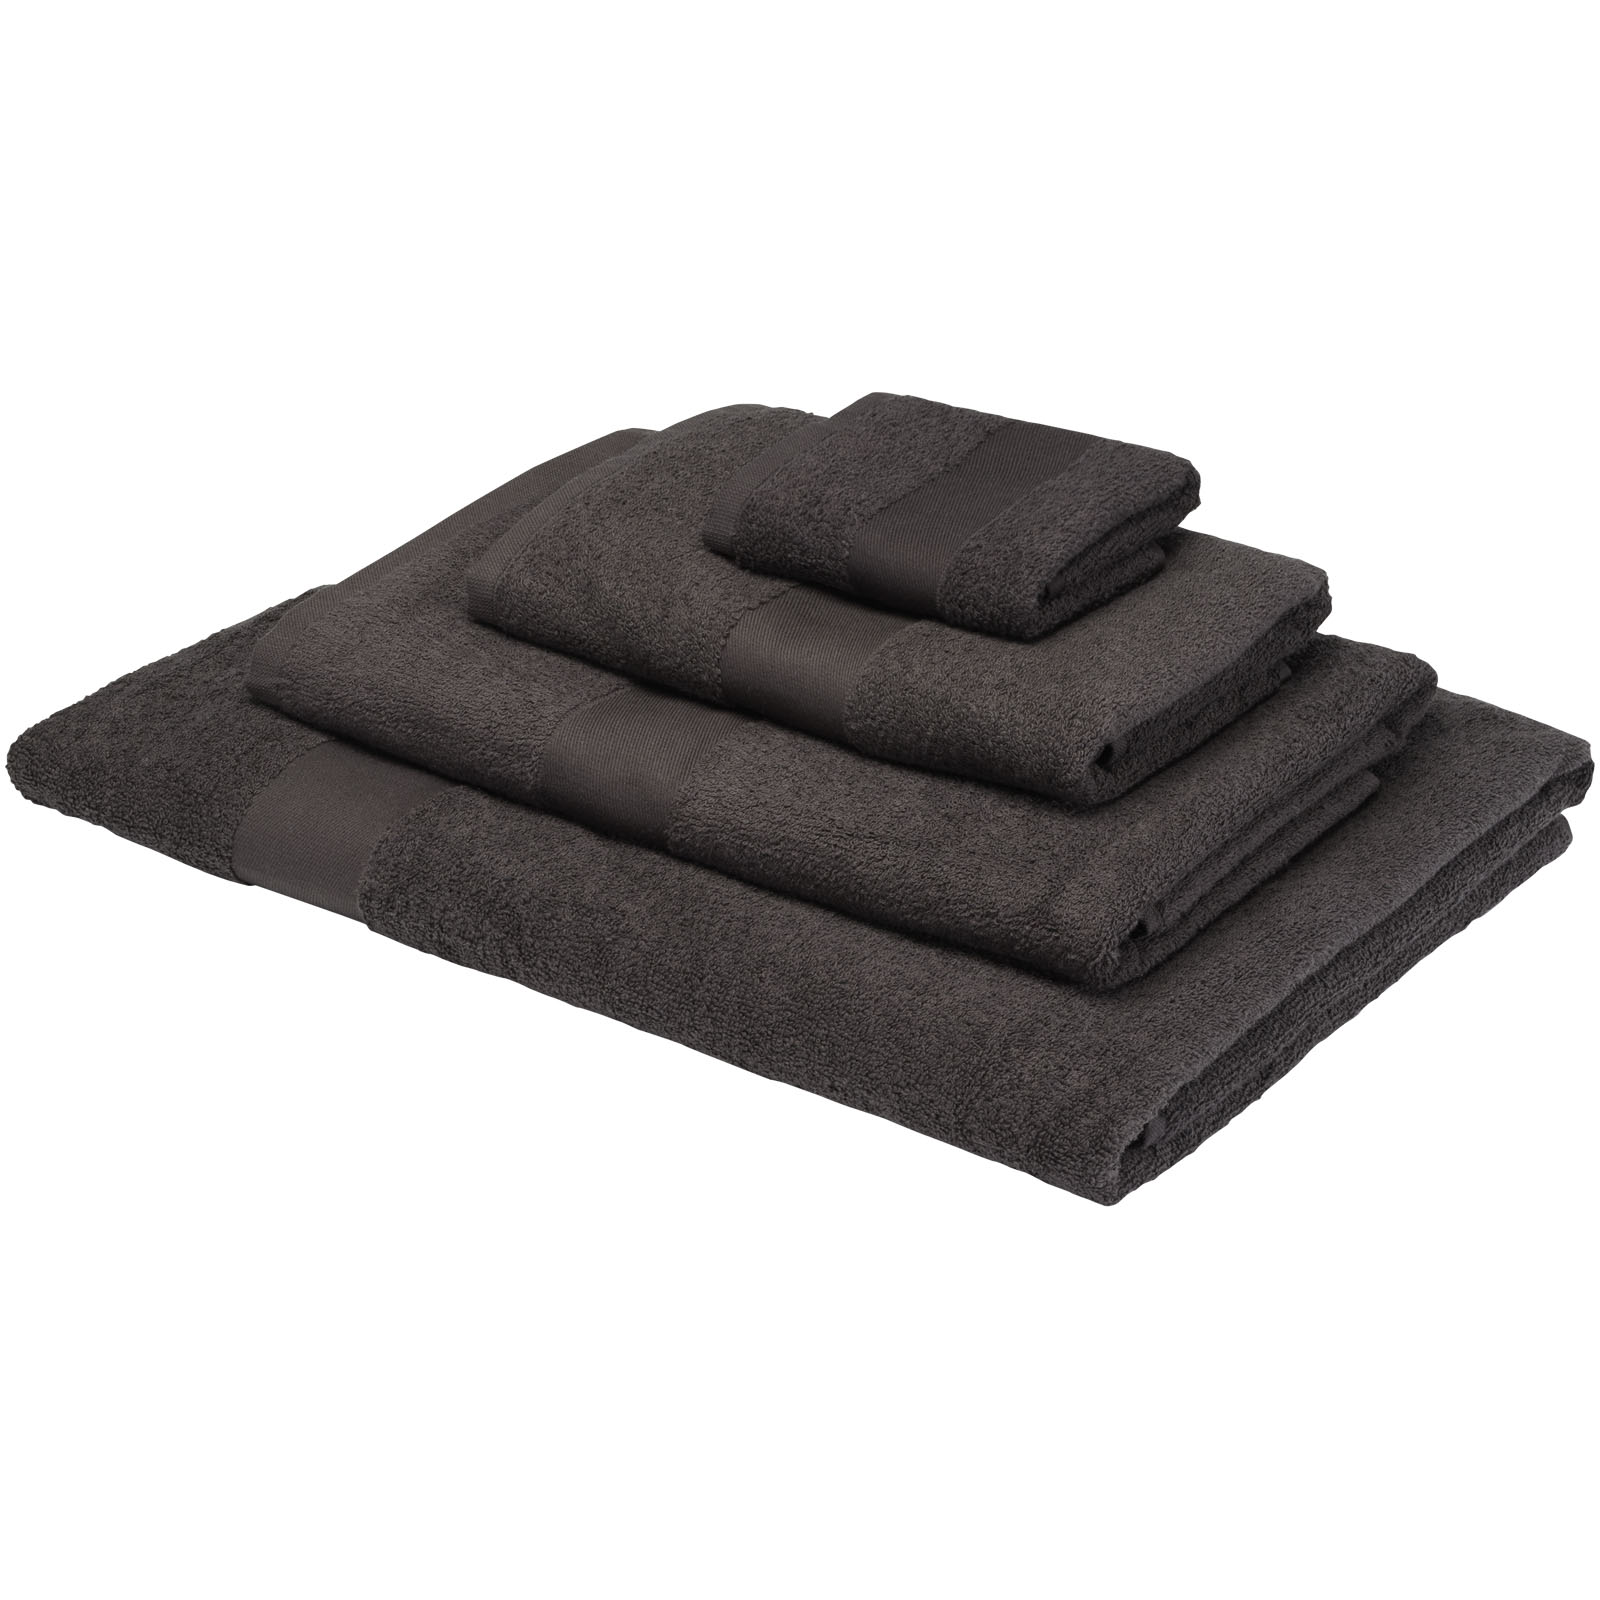 Advertising Towels - Sophia 450 g/m² cotton towel 30x50 cm - 2